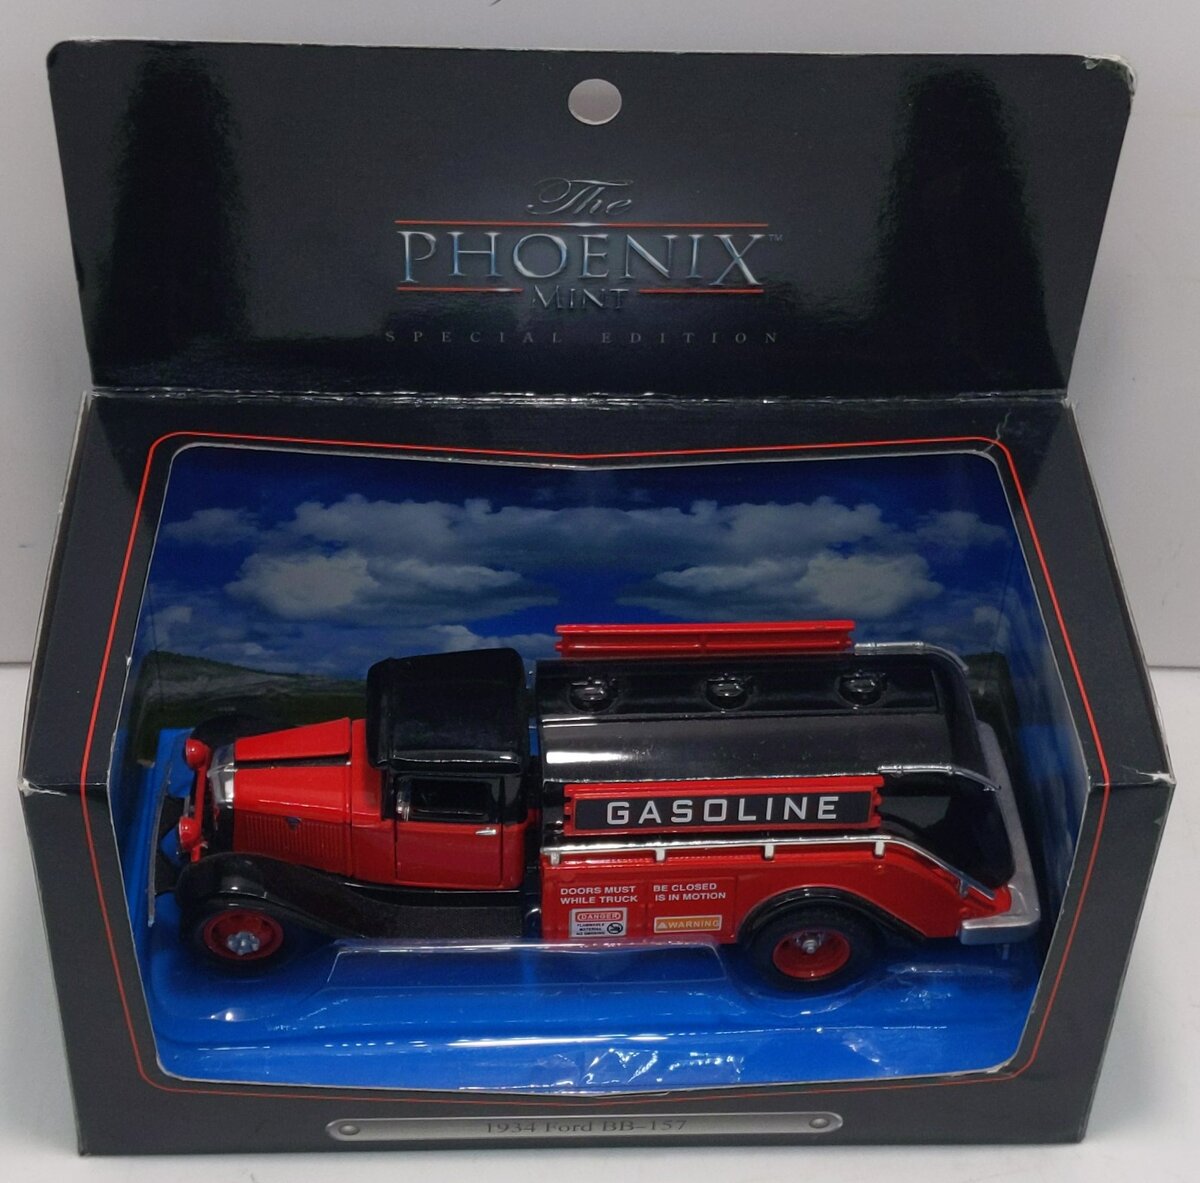 The Phoenix Mint 18383 1:43 Die-Cast 1934 Ford BB-157 Special Edition Gas Tanker LN/Box